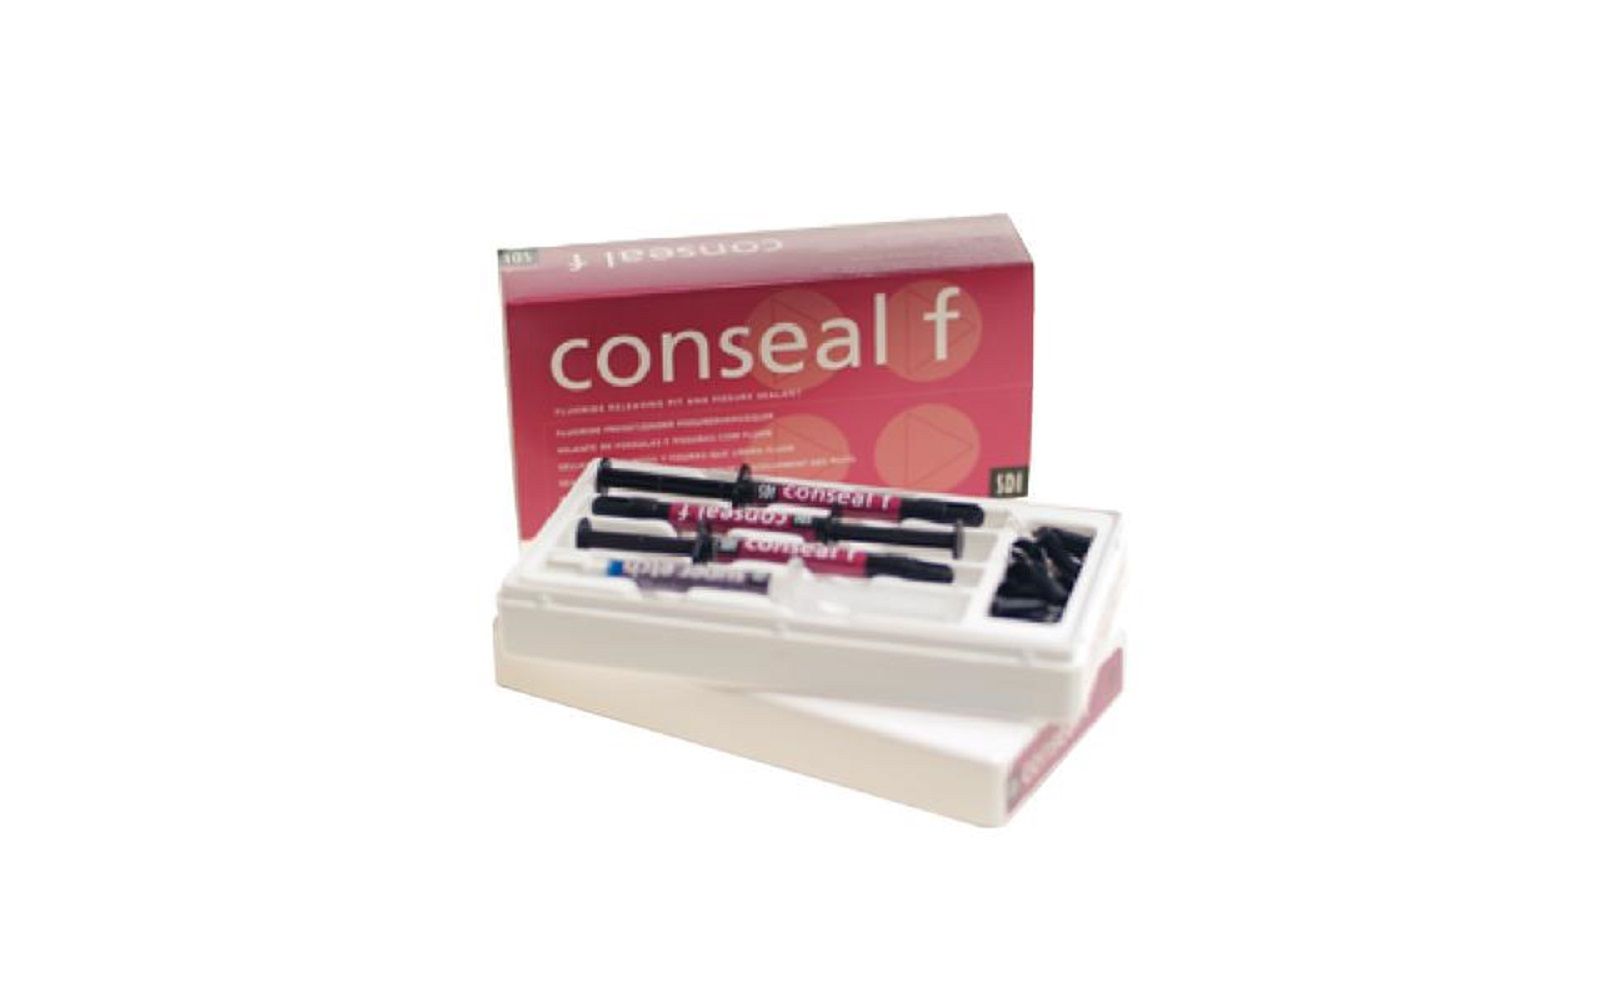 Conseal f syringe kit